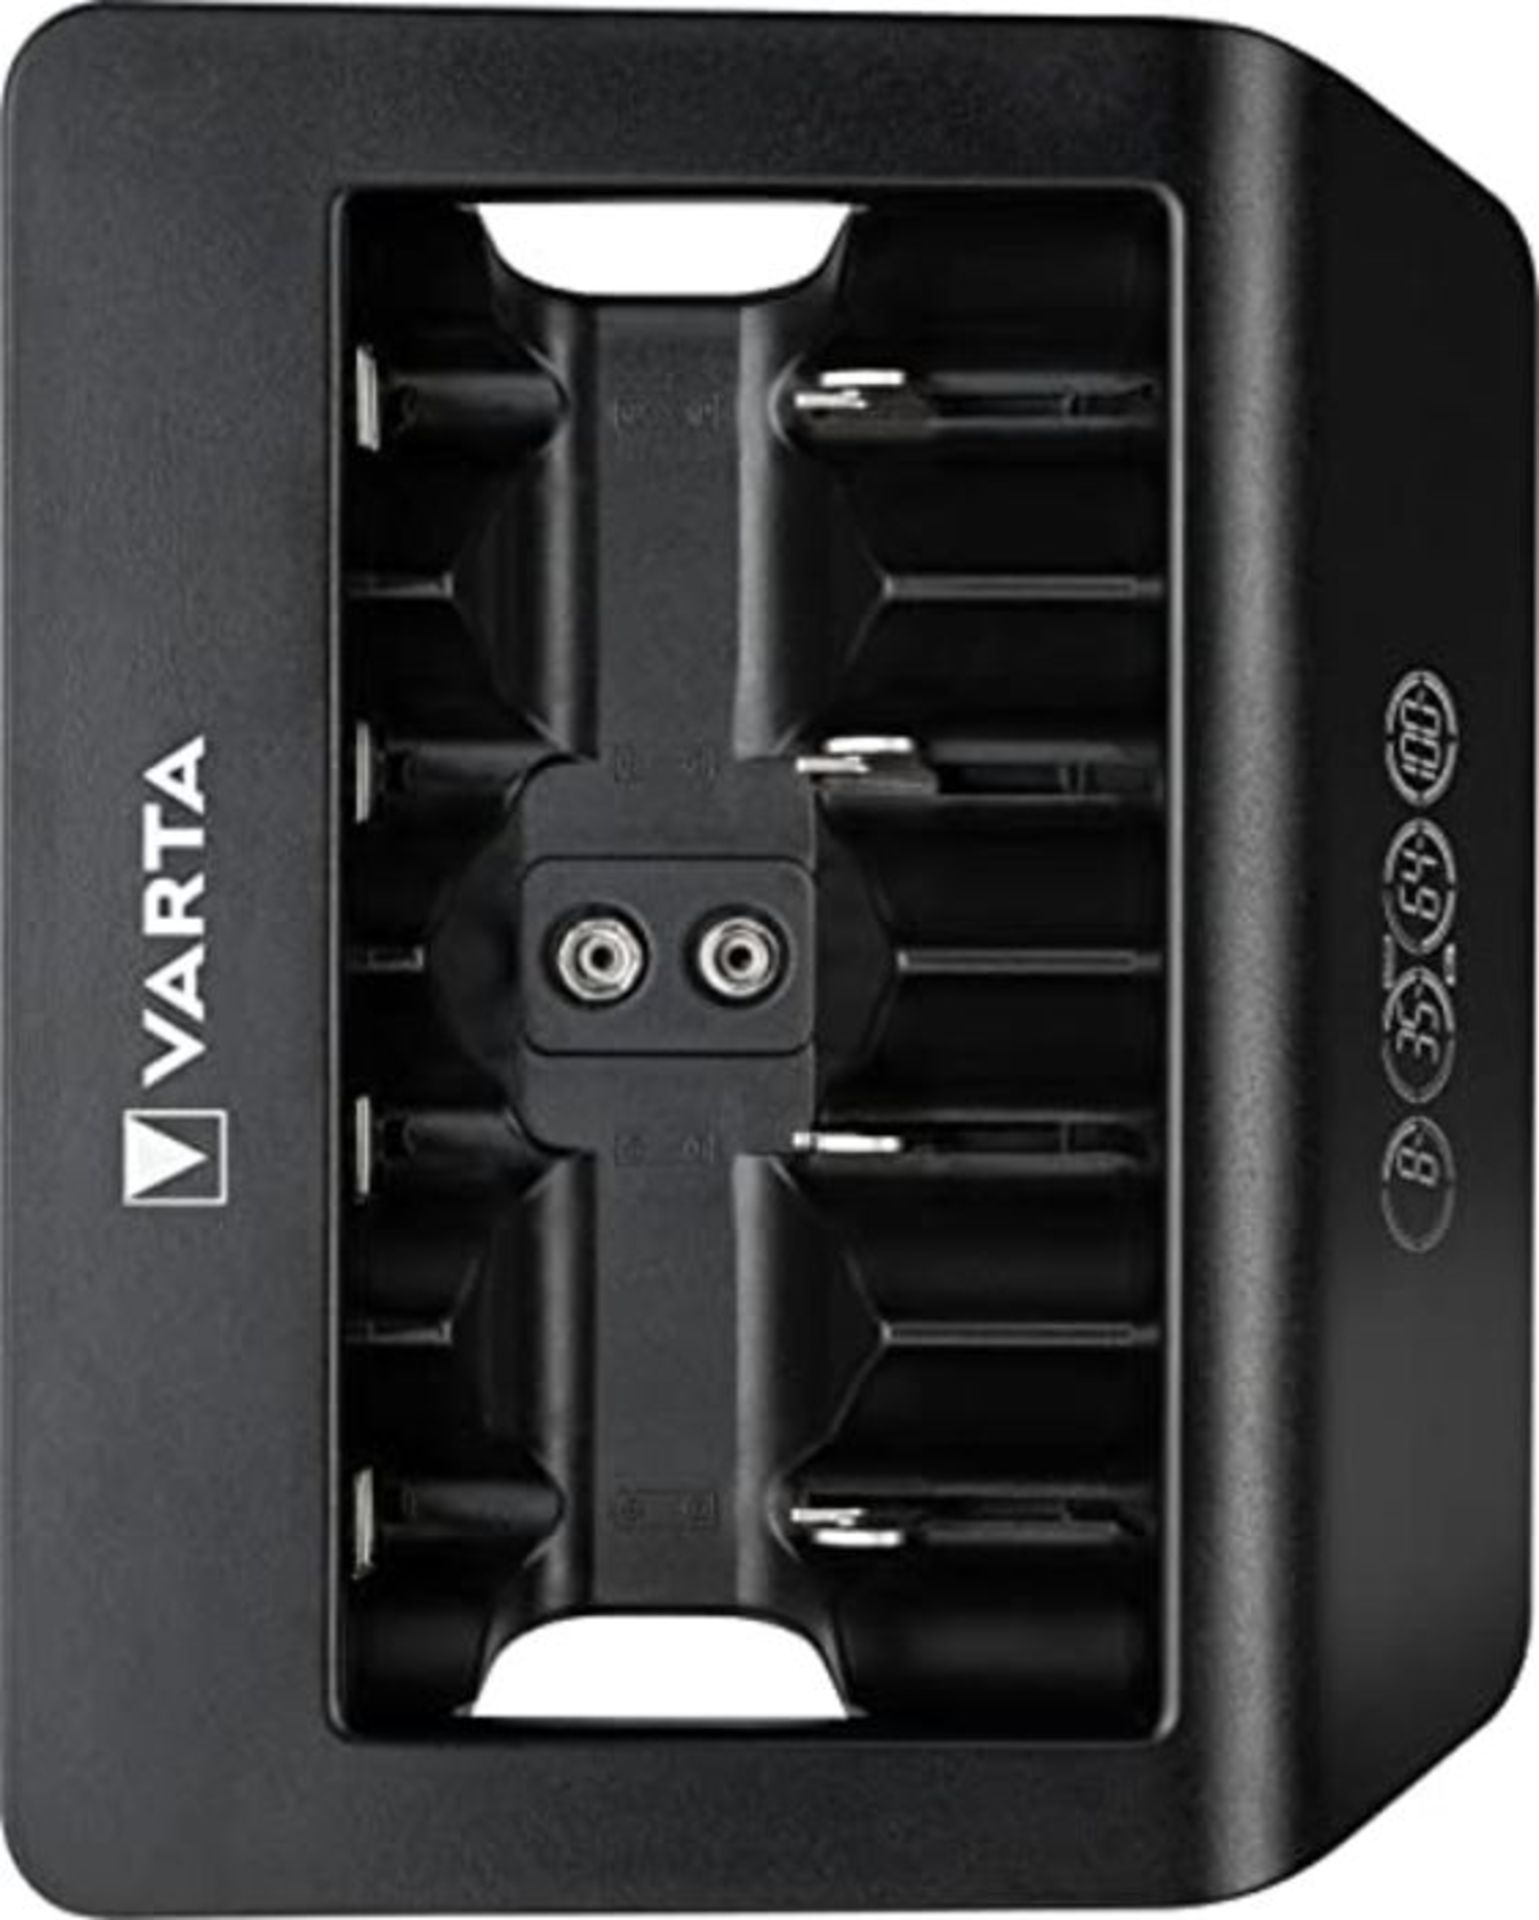 VARTA Universal Charger+, LadegerÃ¤t fÃ¼r Akkus in AA/AAA/9V und USB GerÃ¤te, Ei